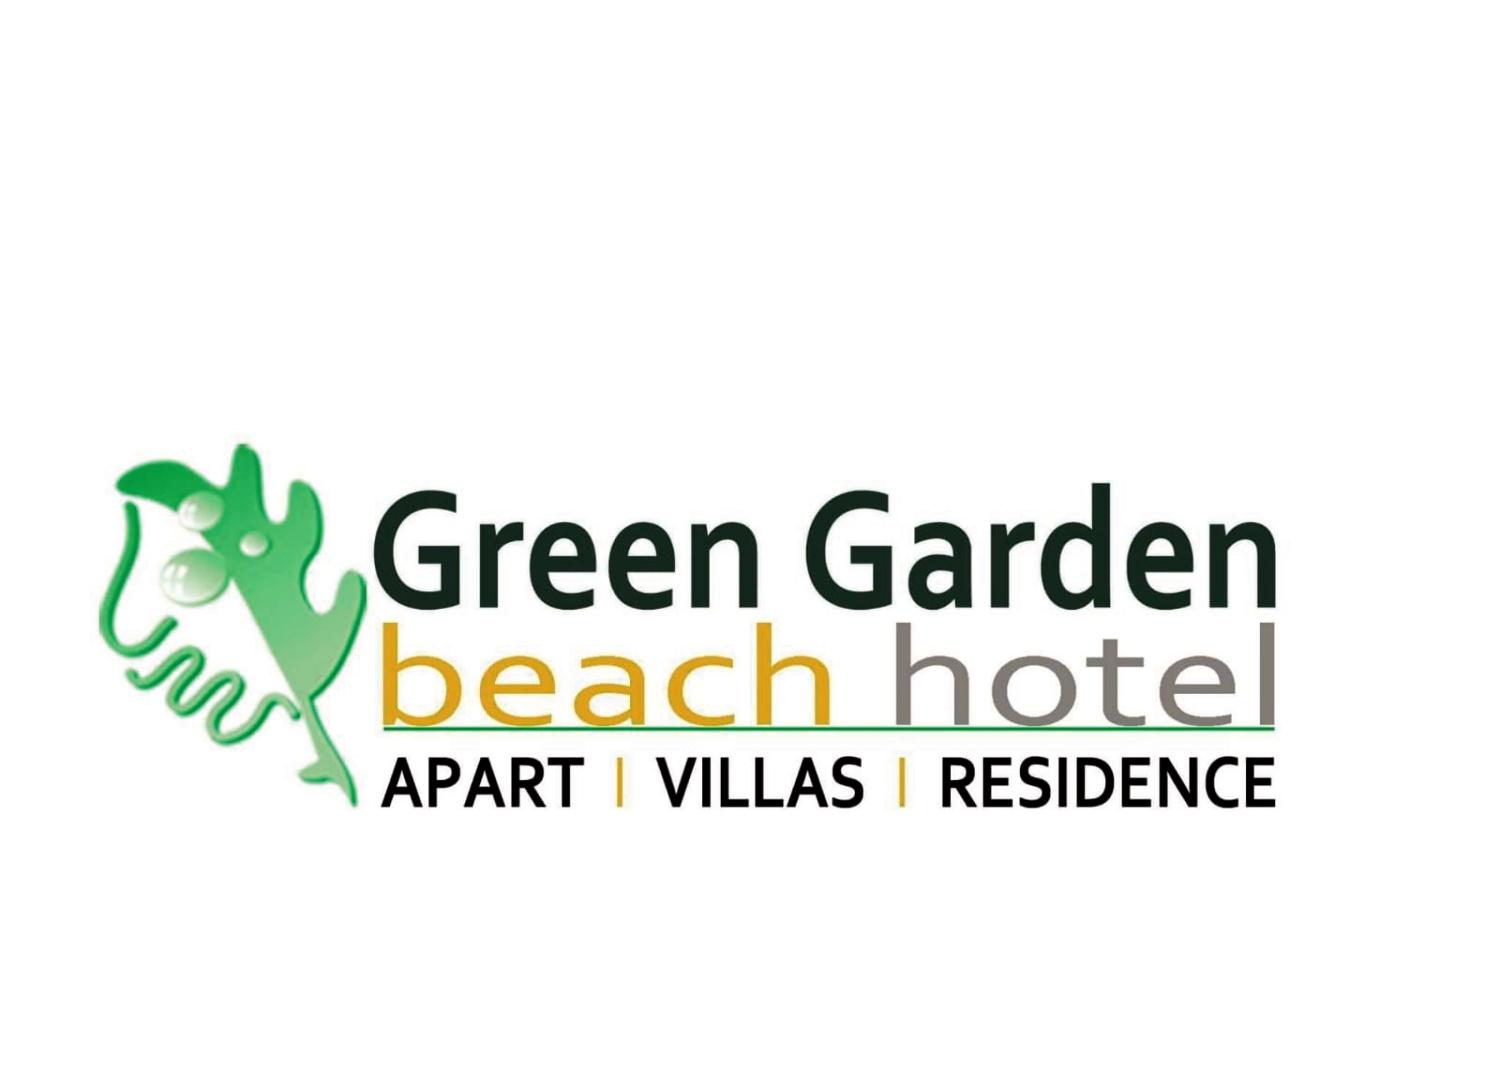 Green Garden Resort Spa & Hotel